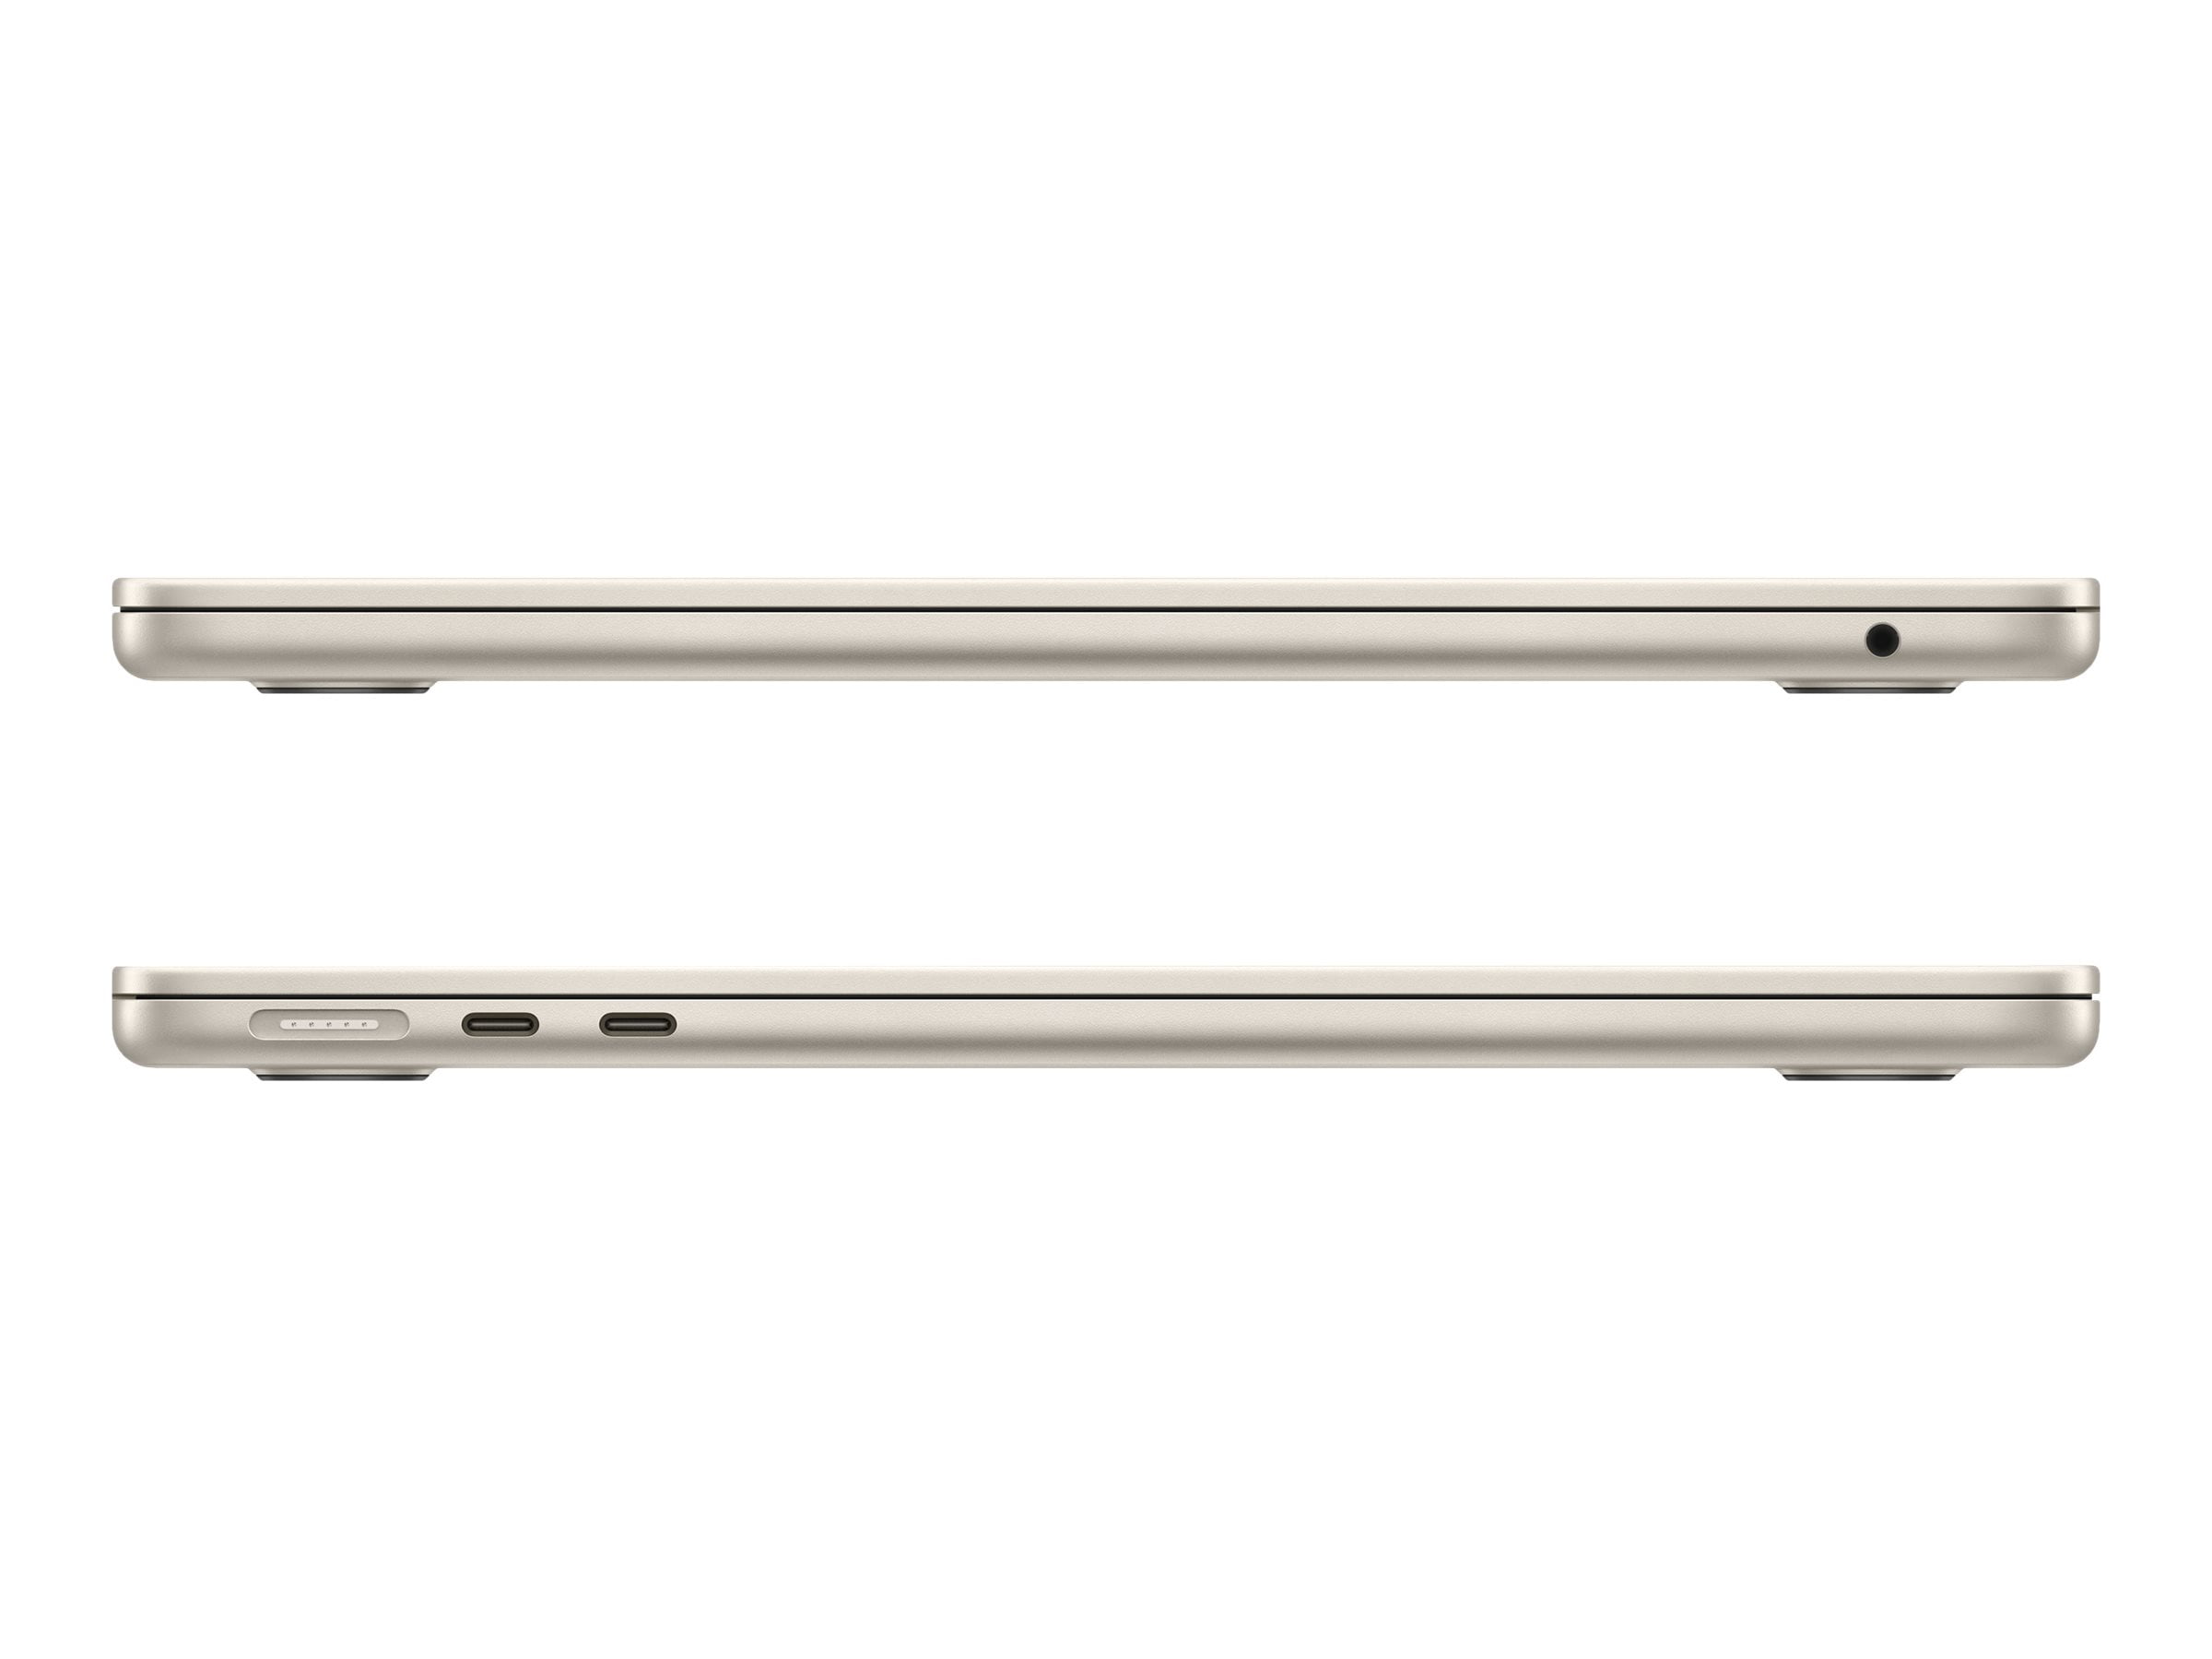 2022 Apple MacBook Air with M2 chip: 13.6-inch, 8GB RAM, 256GB SSD